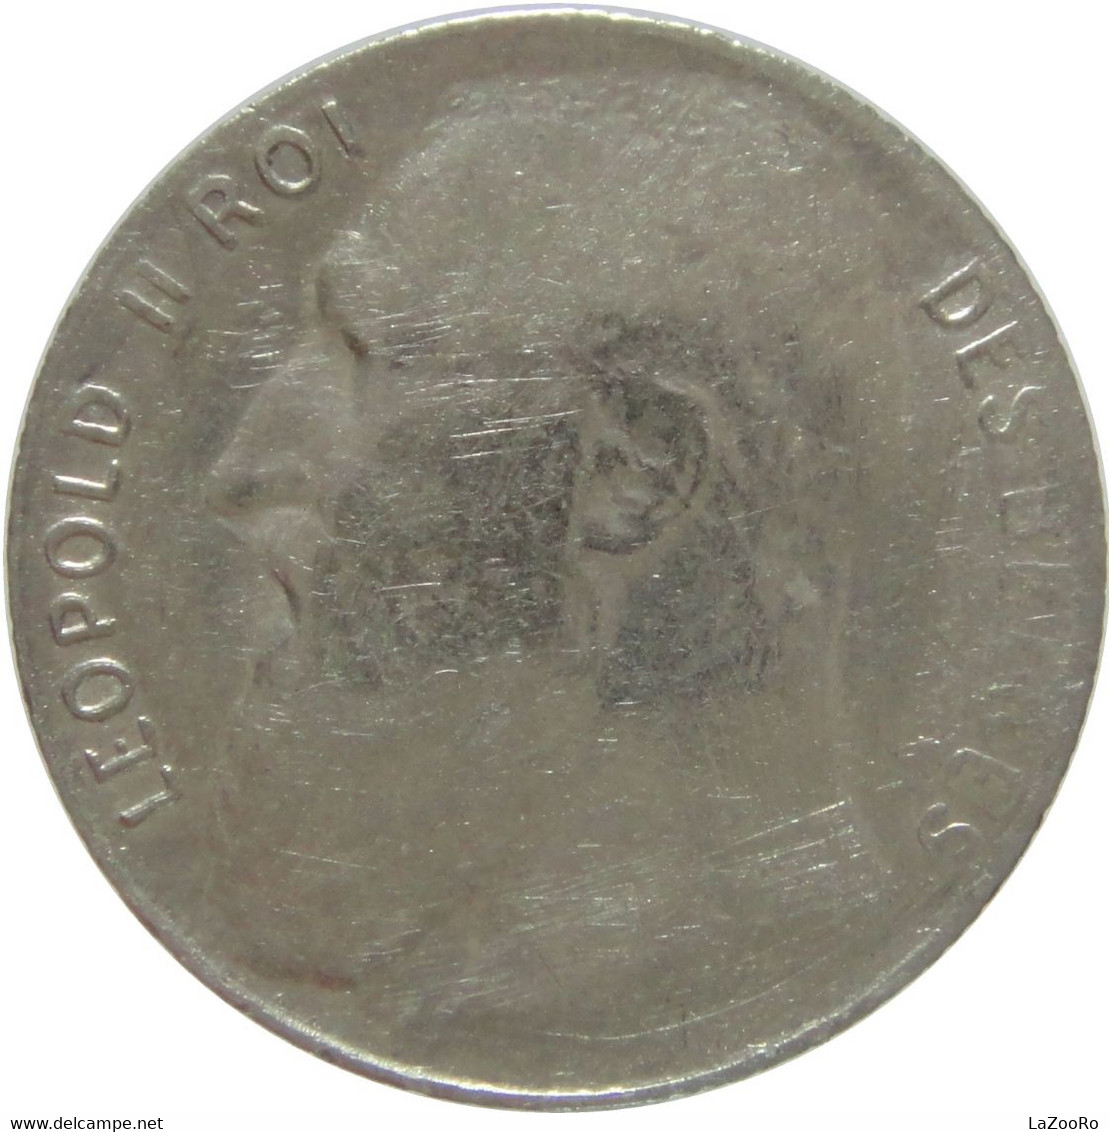 LaZooRo: Belgium 50 Centimes 1901 VF / XF - Silver - 50 Cents